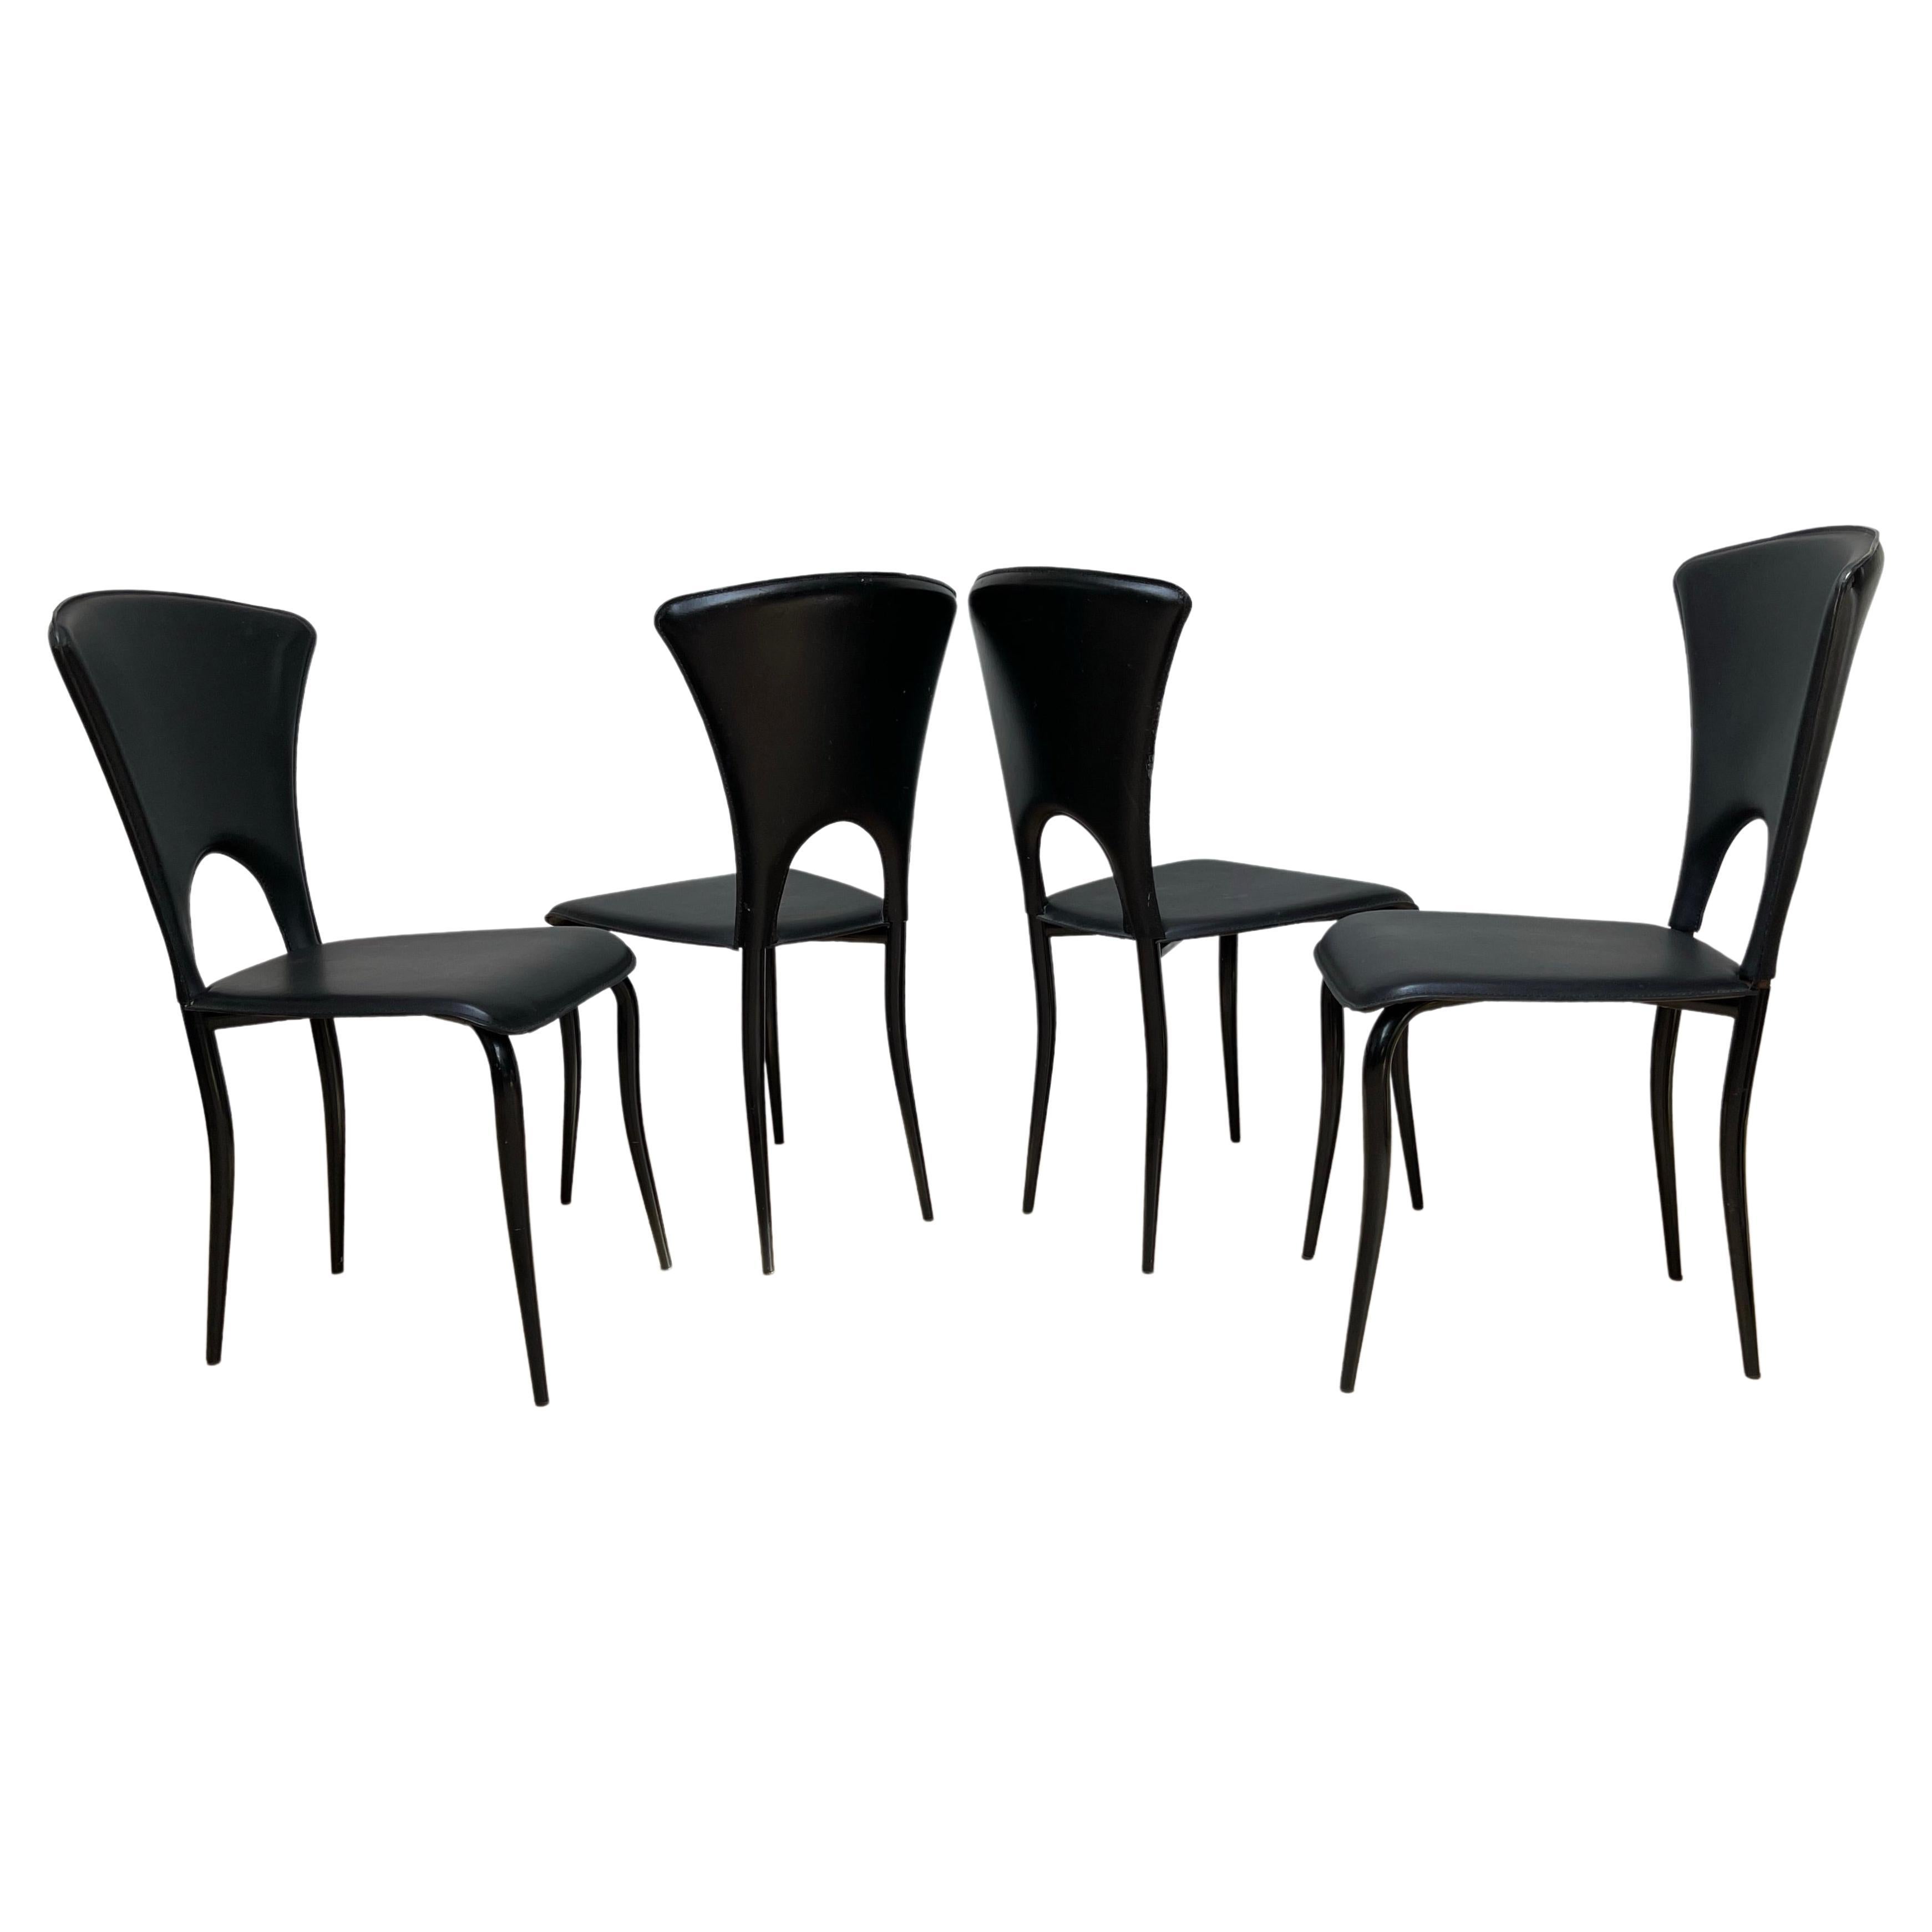 Italian Design Mid-Century Modern Set of 4 Dining Chairs w. Black Leather Seats